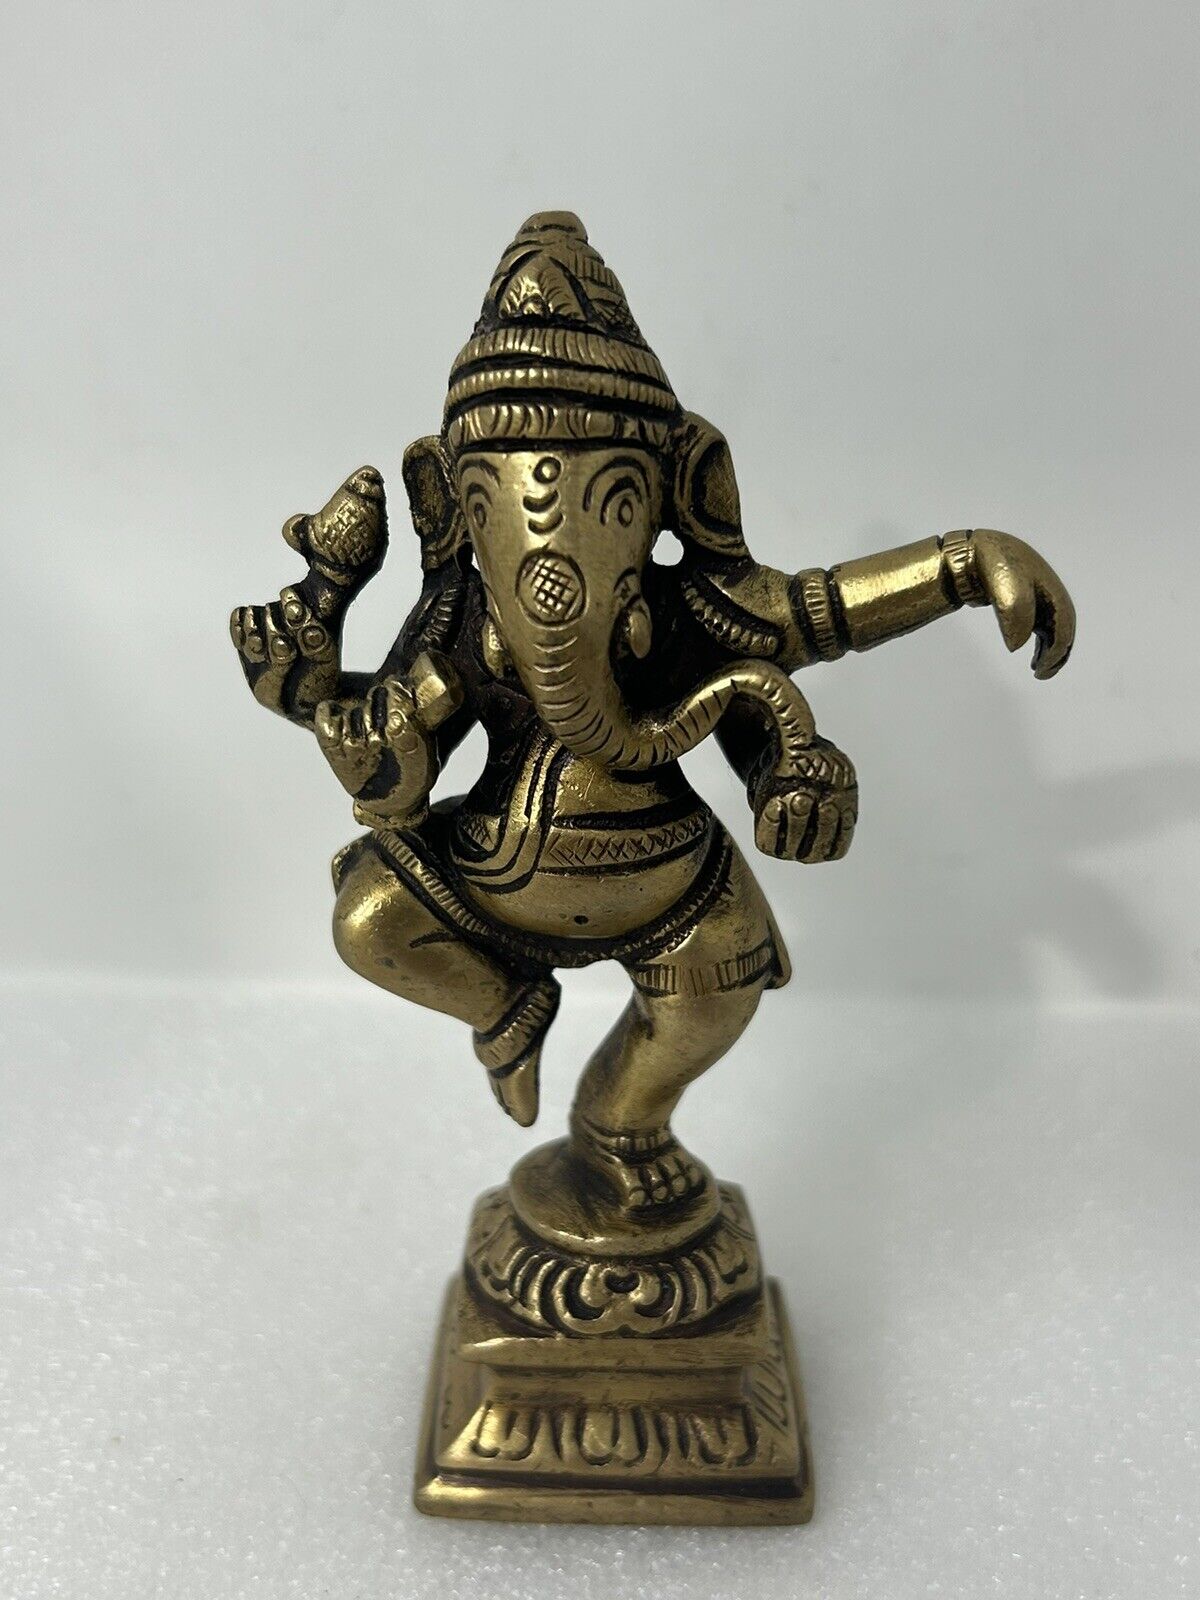 Brass Dancing Ganesha, Elephant Headed Hindu God Figure / Statue - 4in.